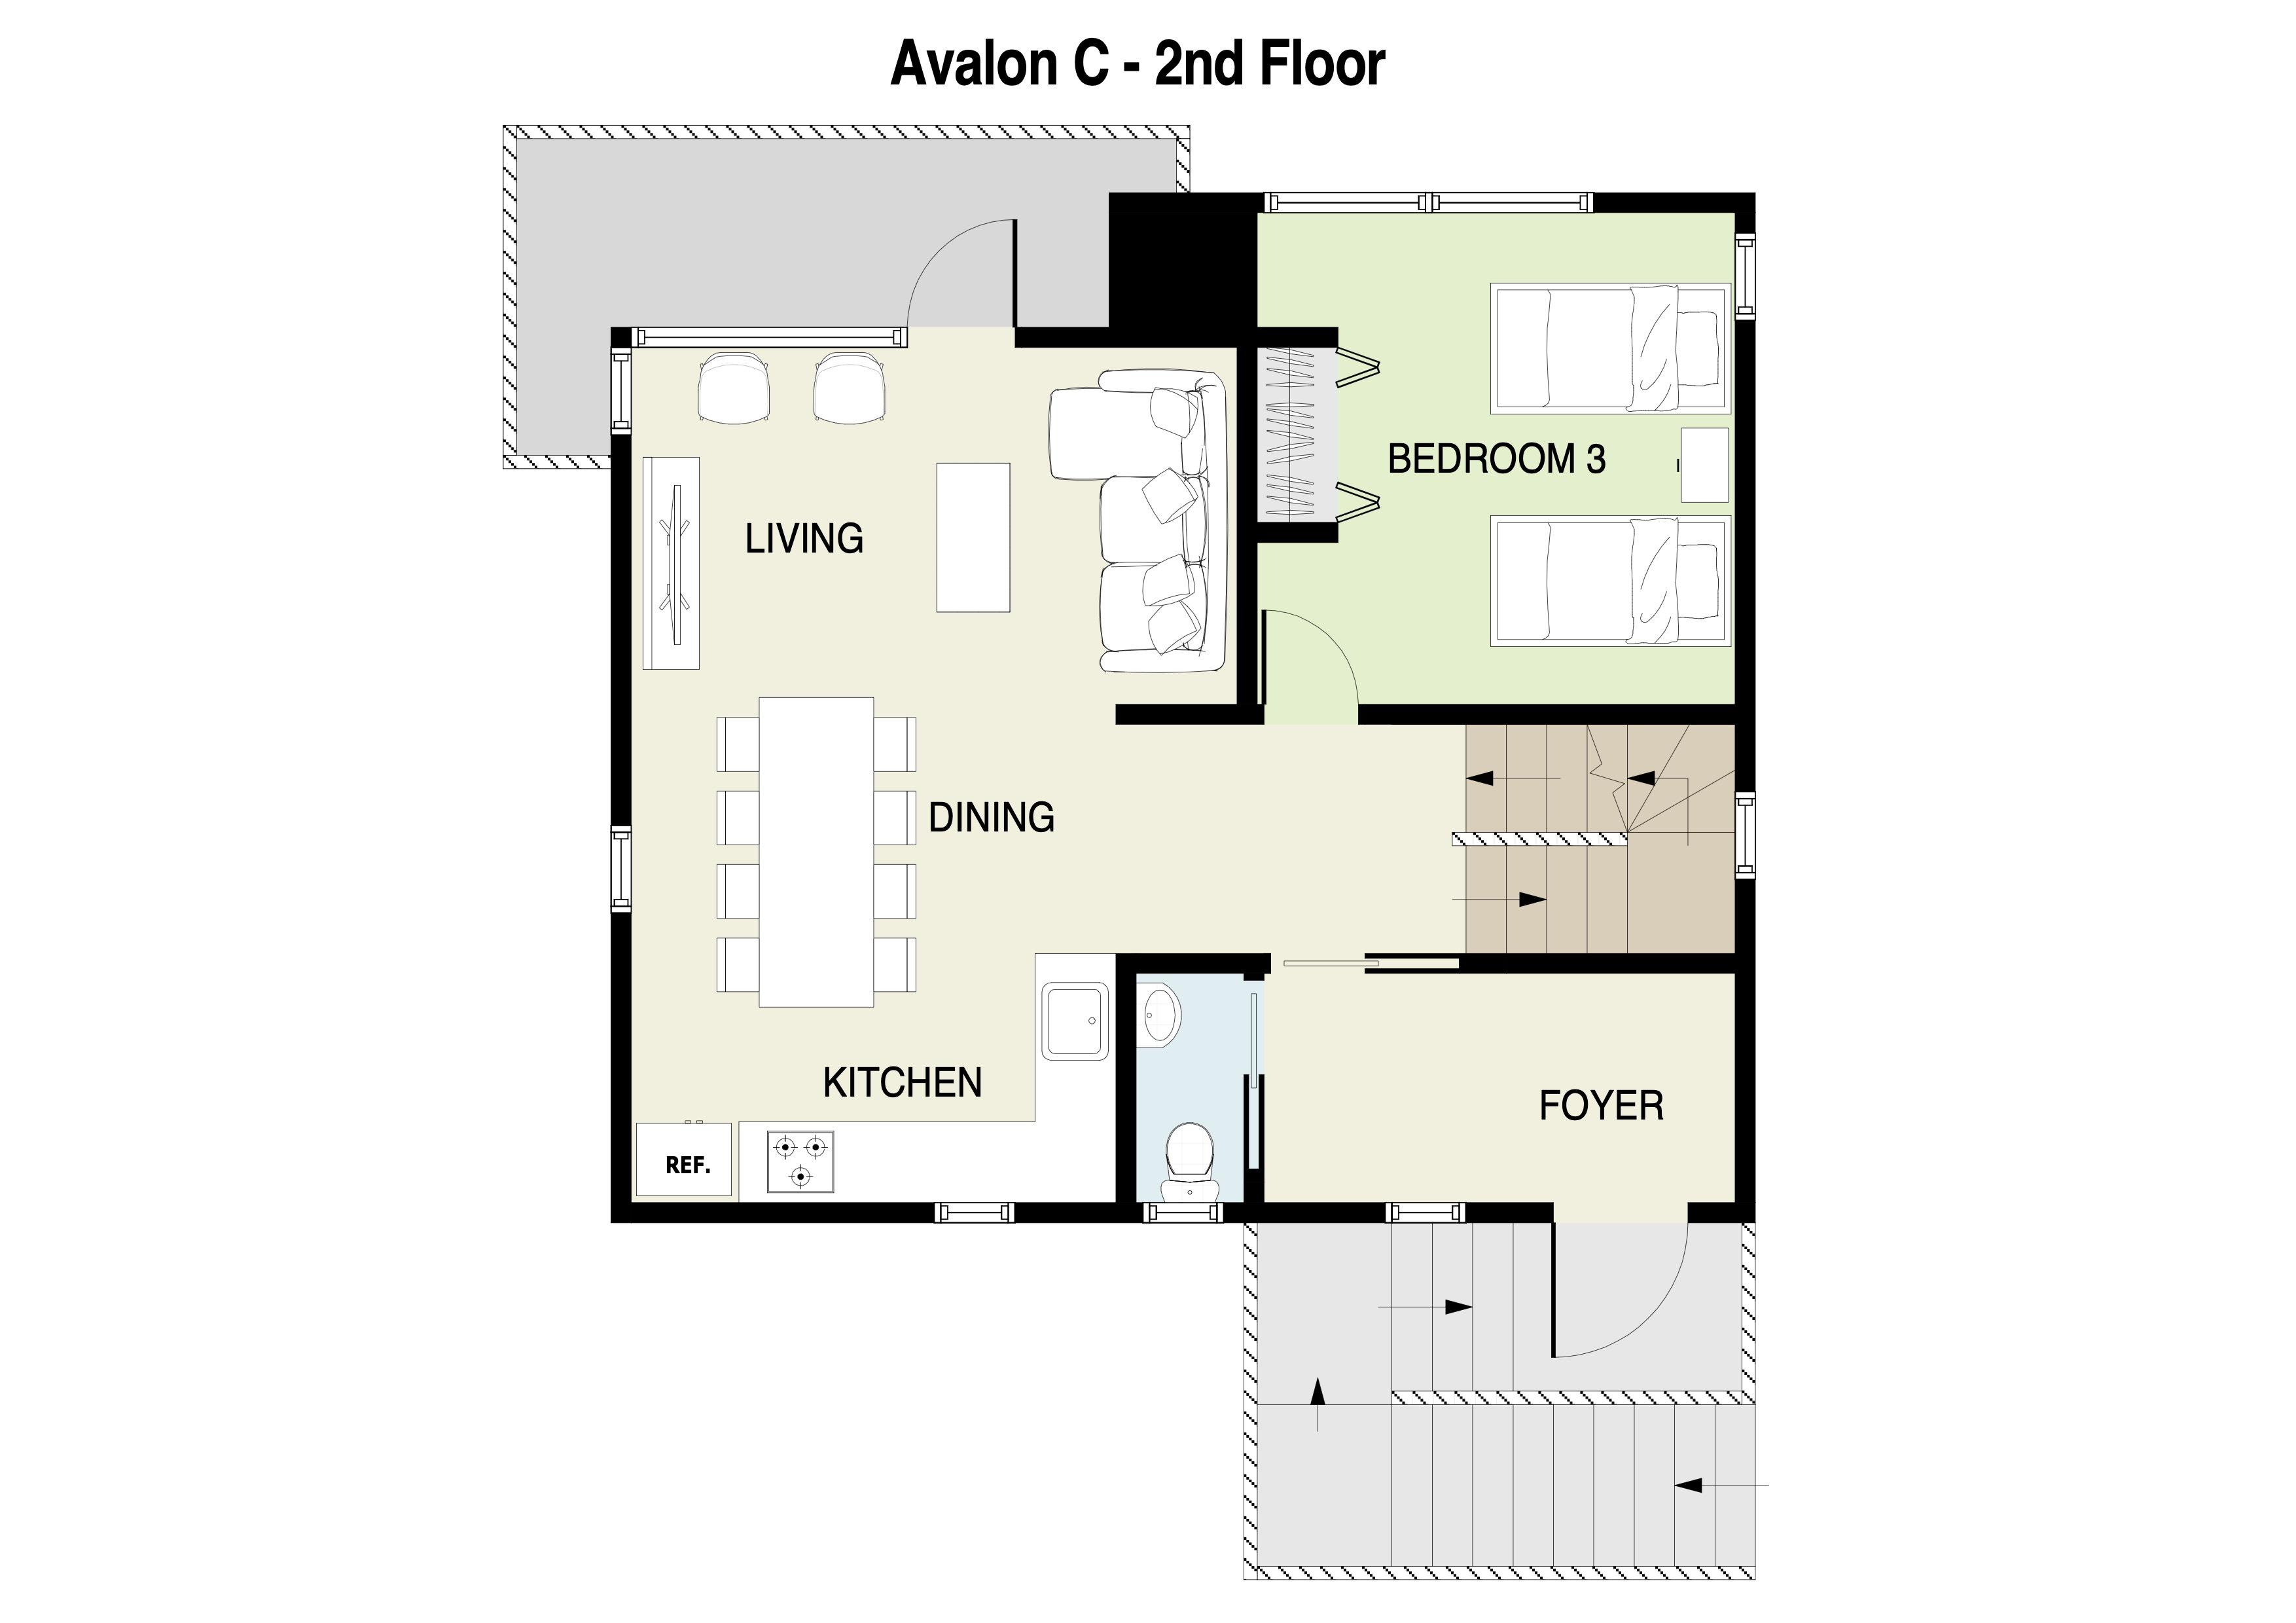 Avalon C 2nd floor plans